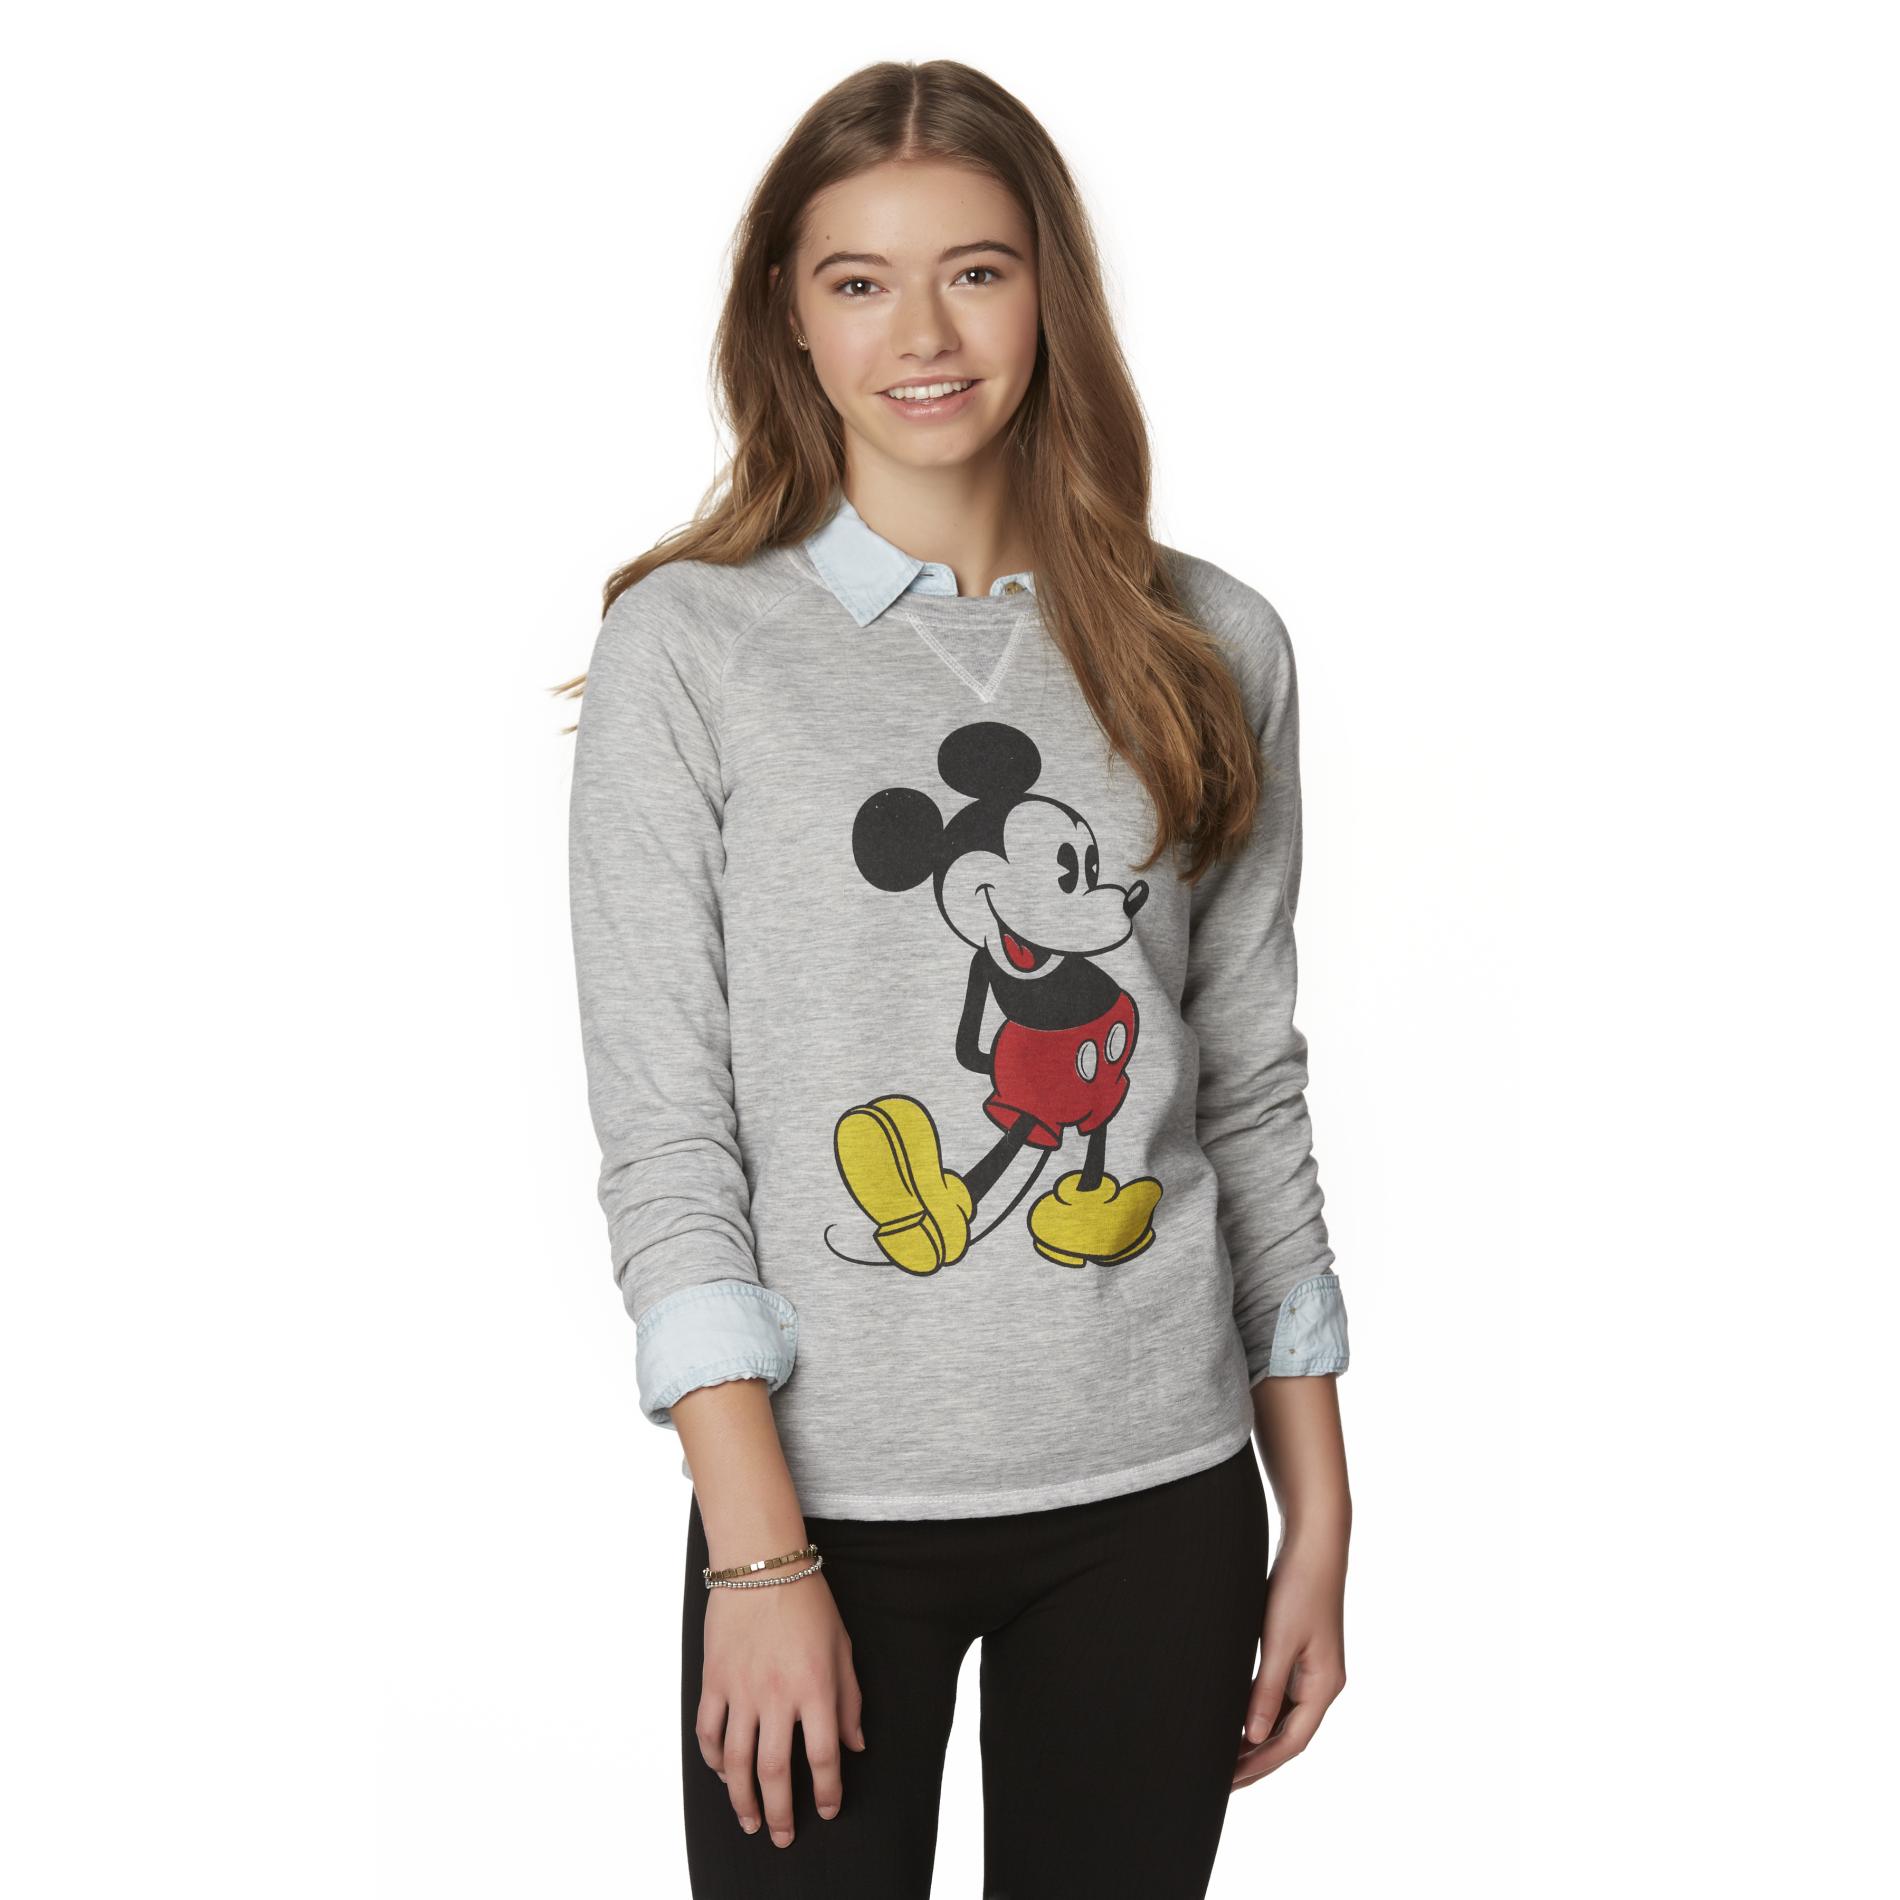 Disney Mickey Mouse Juniors' Graphic Sweatshirt